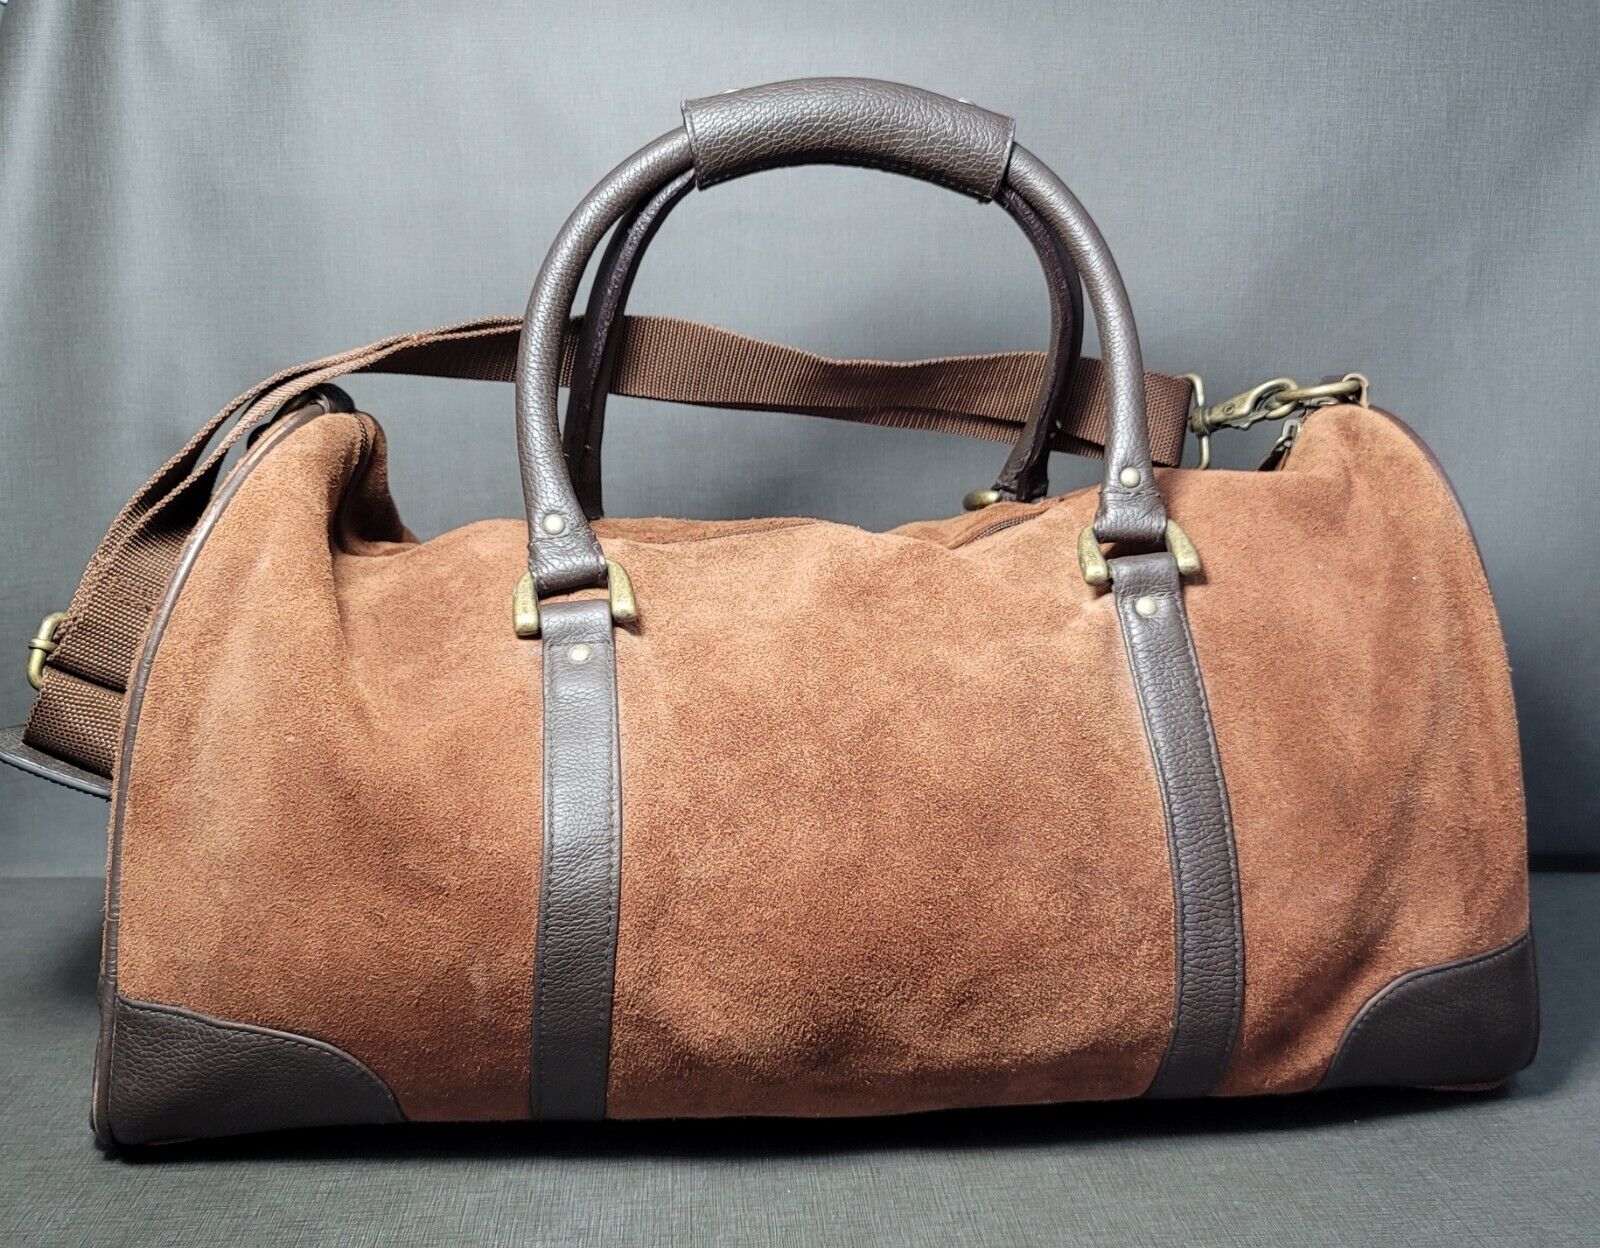 Marlboro 03 Guts Grit Gear Brown Suede Leather Duffle Bag Travel  Vtg Weekend